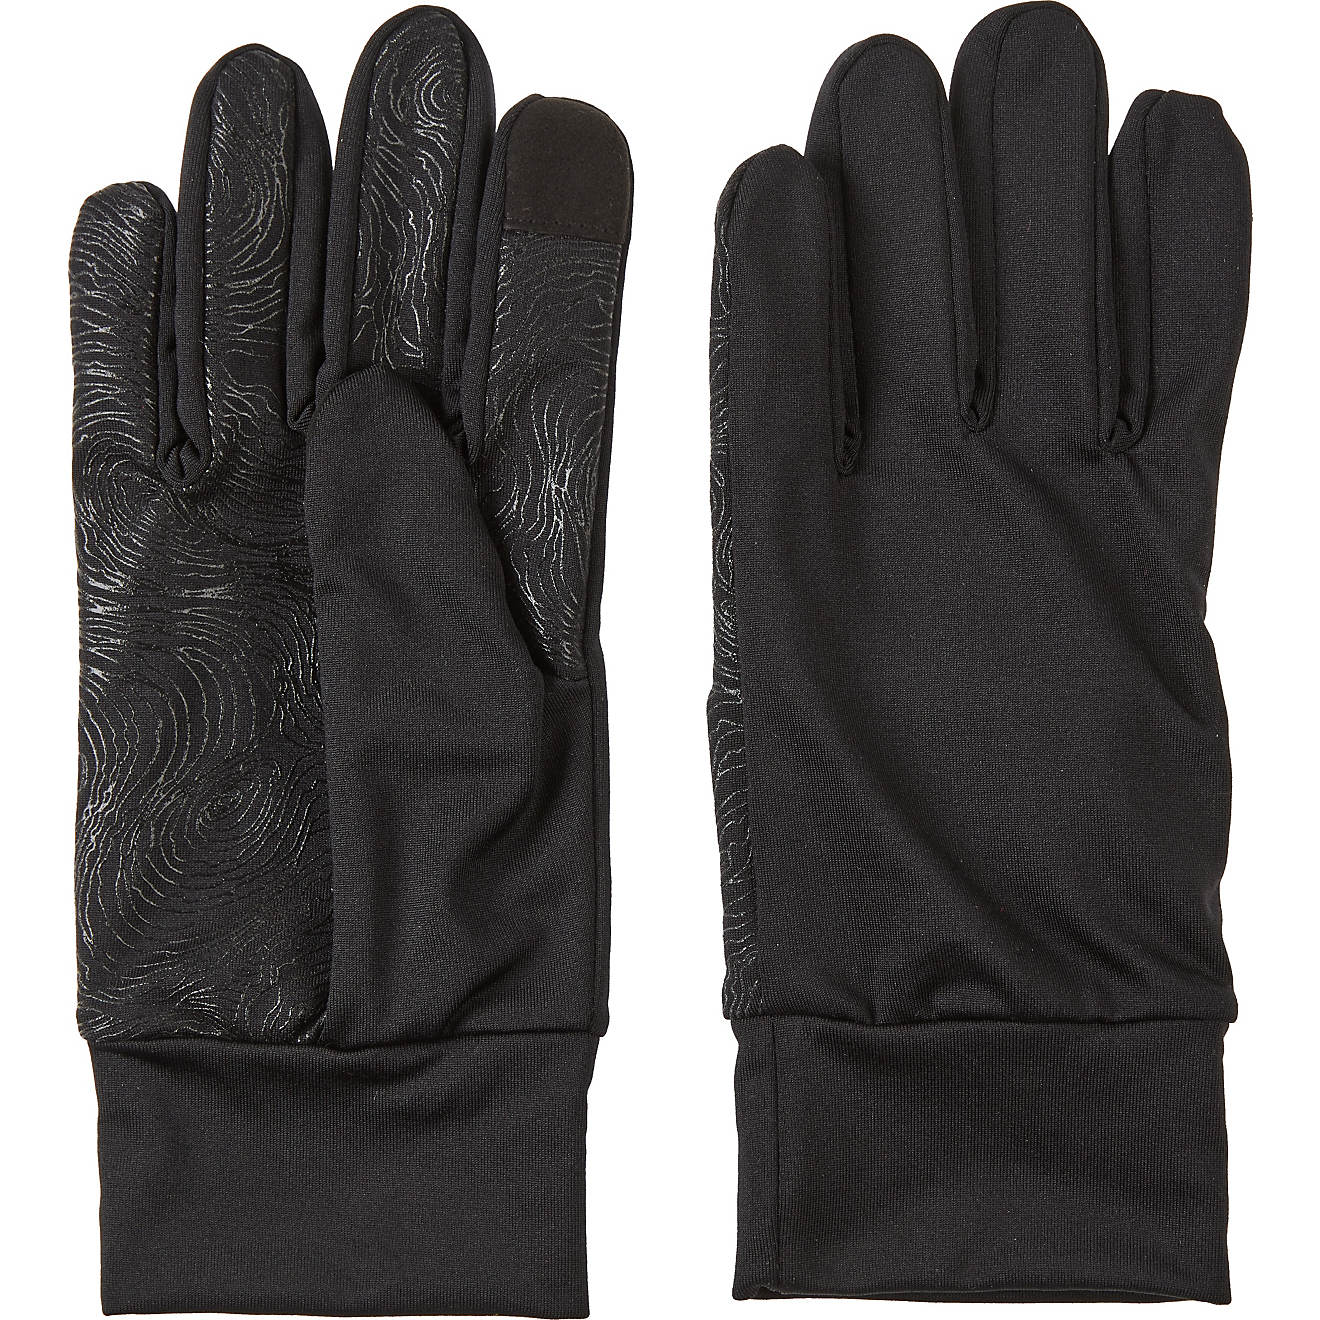 Magellan Outdoors Men's Liner Gloves                                                                                             - view number 1